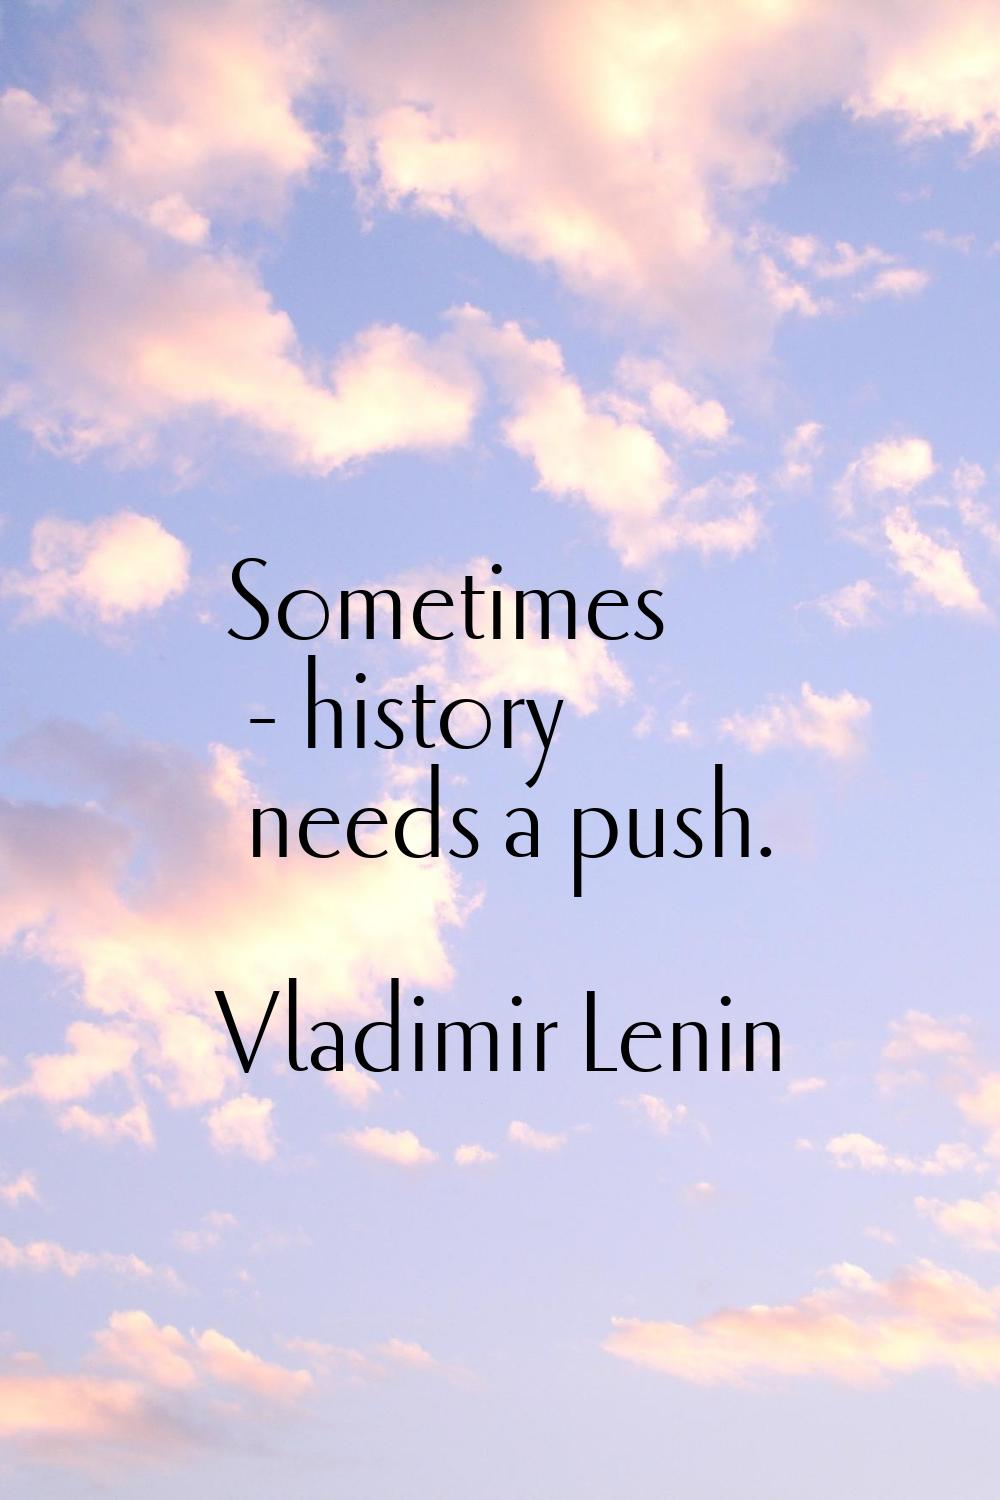 Sometimes - history needs a push.